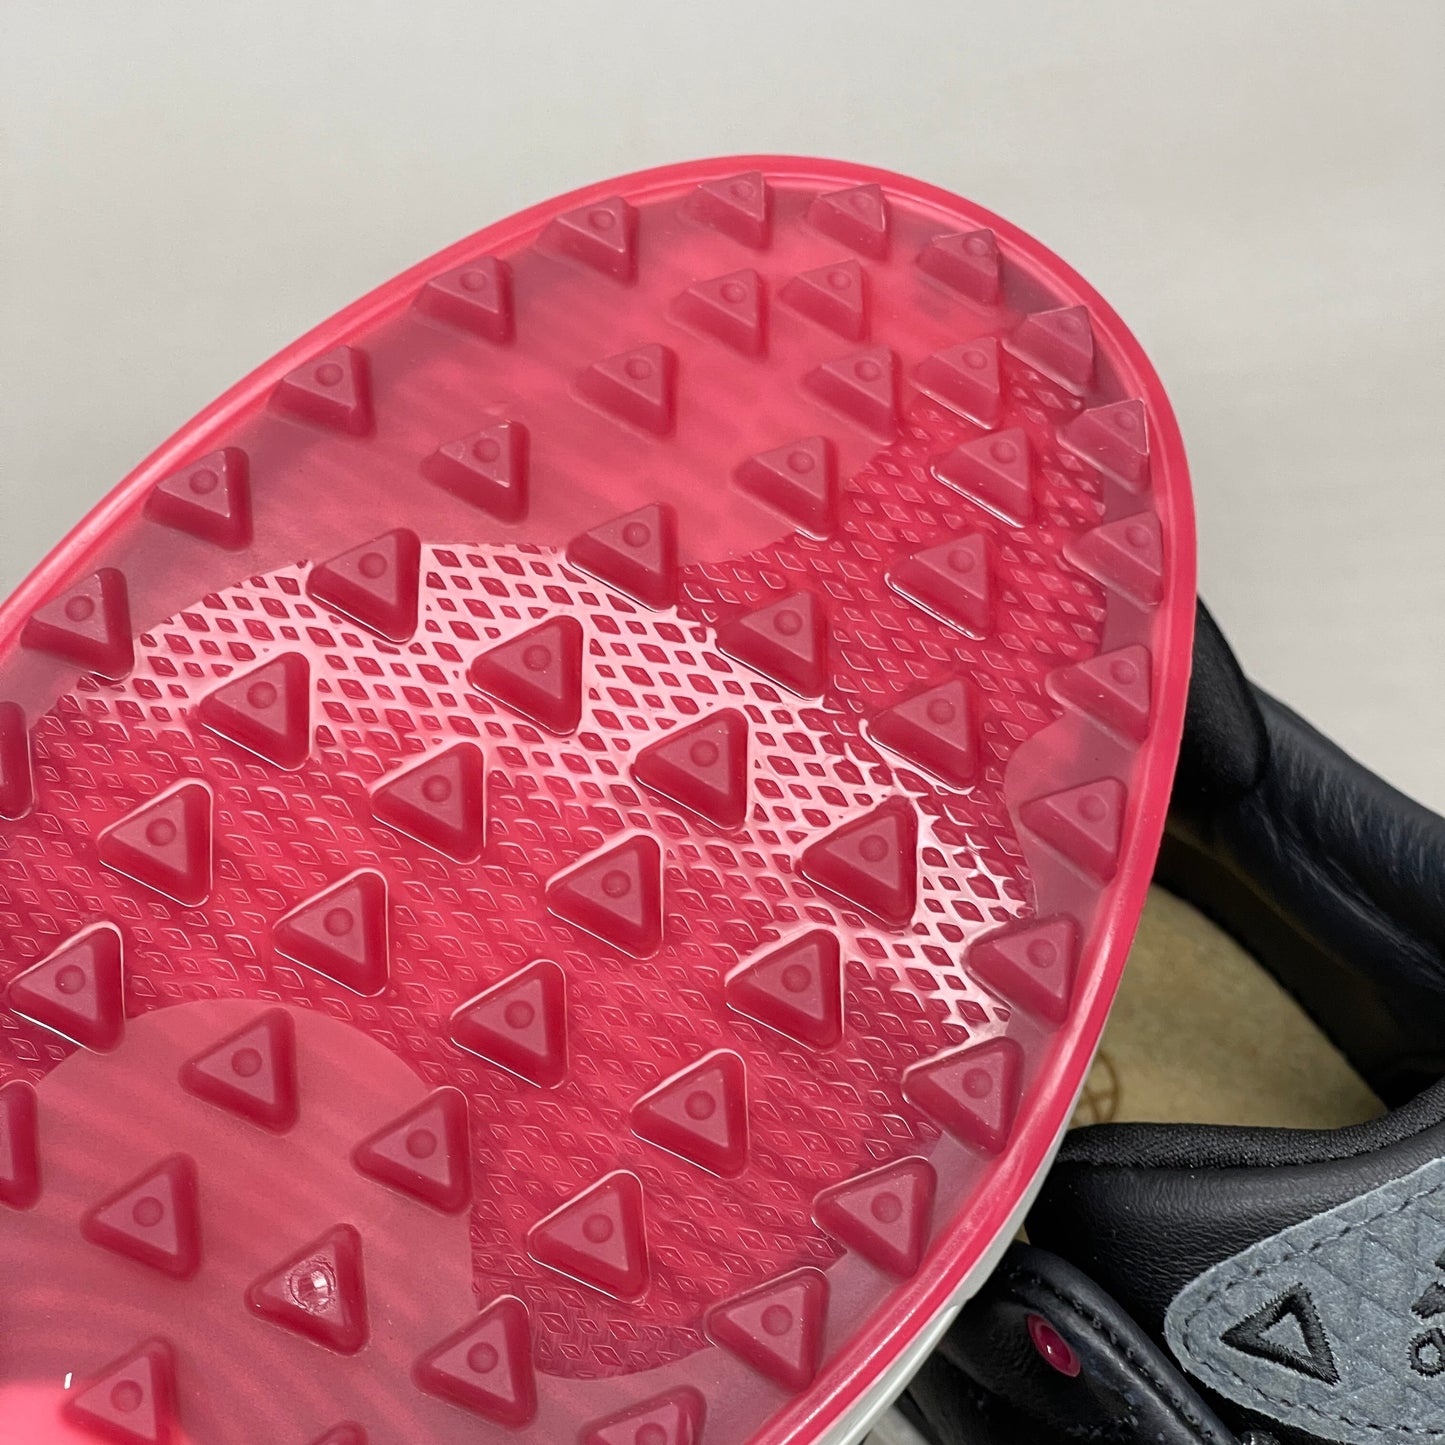 ADIDAS Golf Shoes Waterproof Flopshot Sz 8 Black / Grey / Burgundy GV9670 (New)